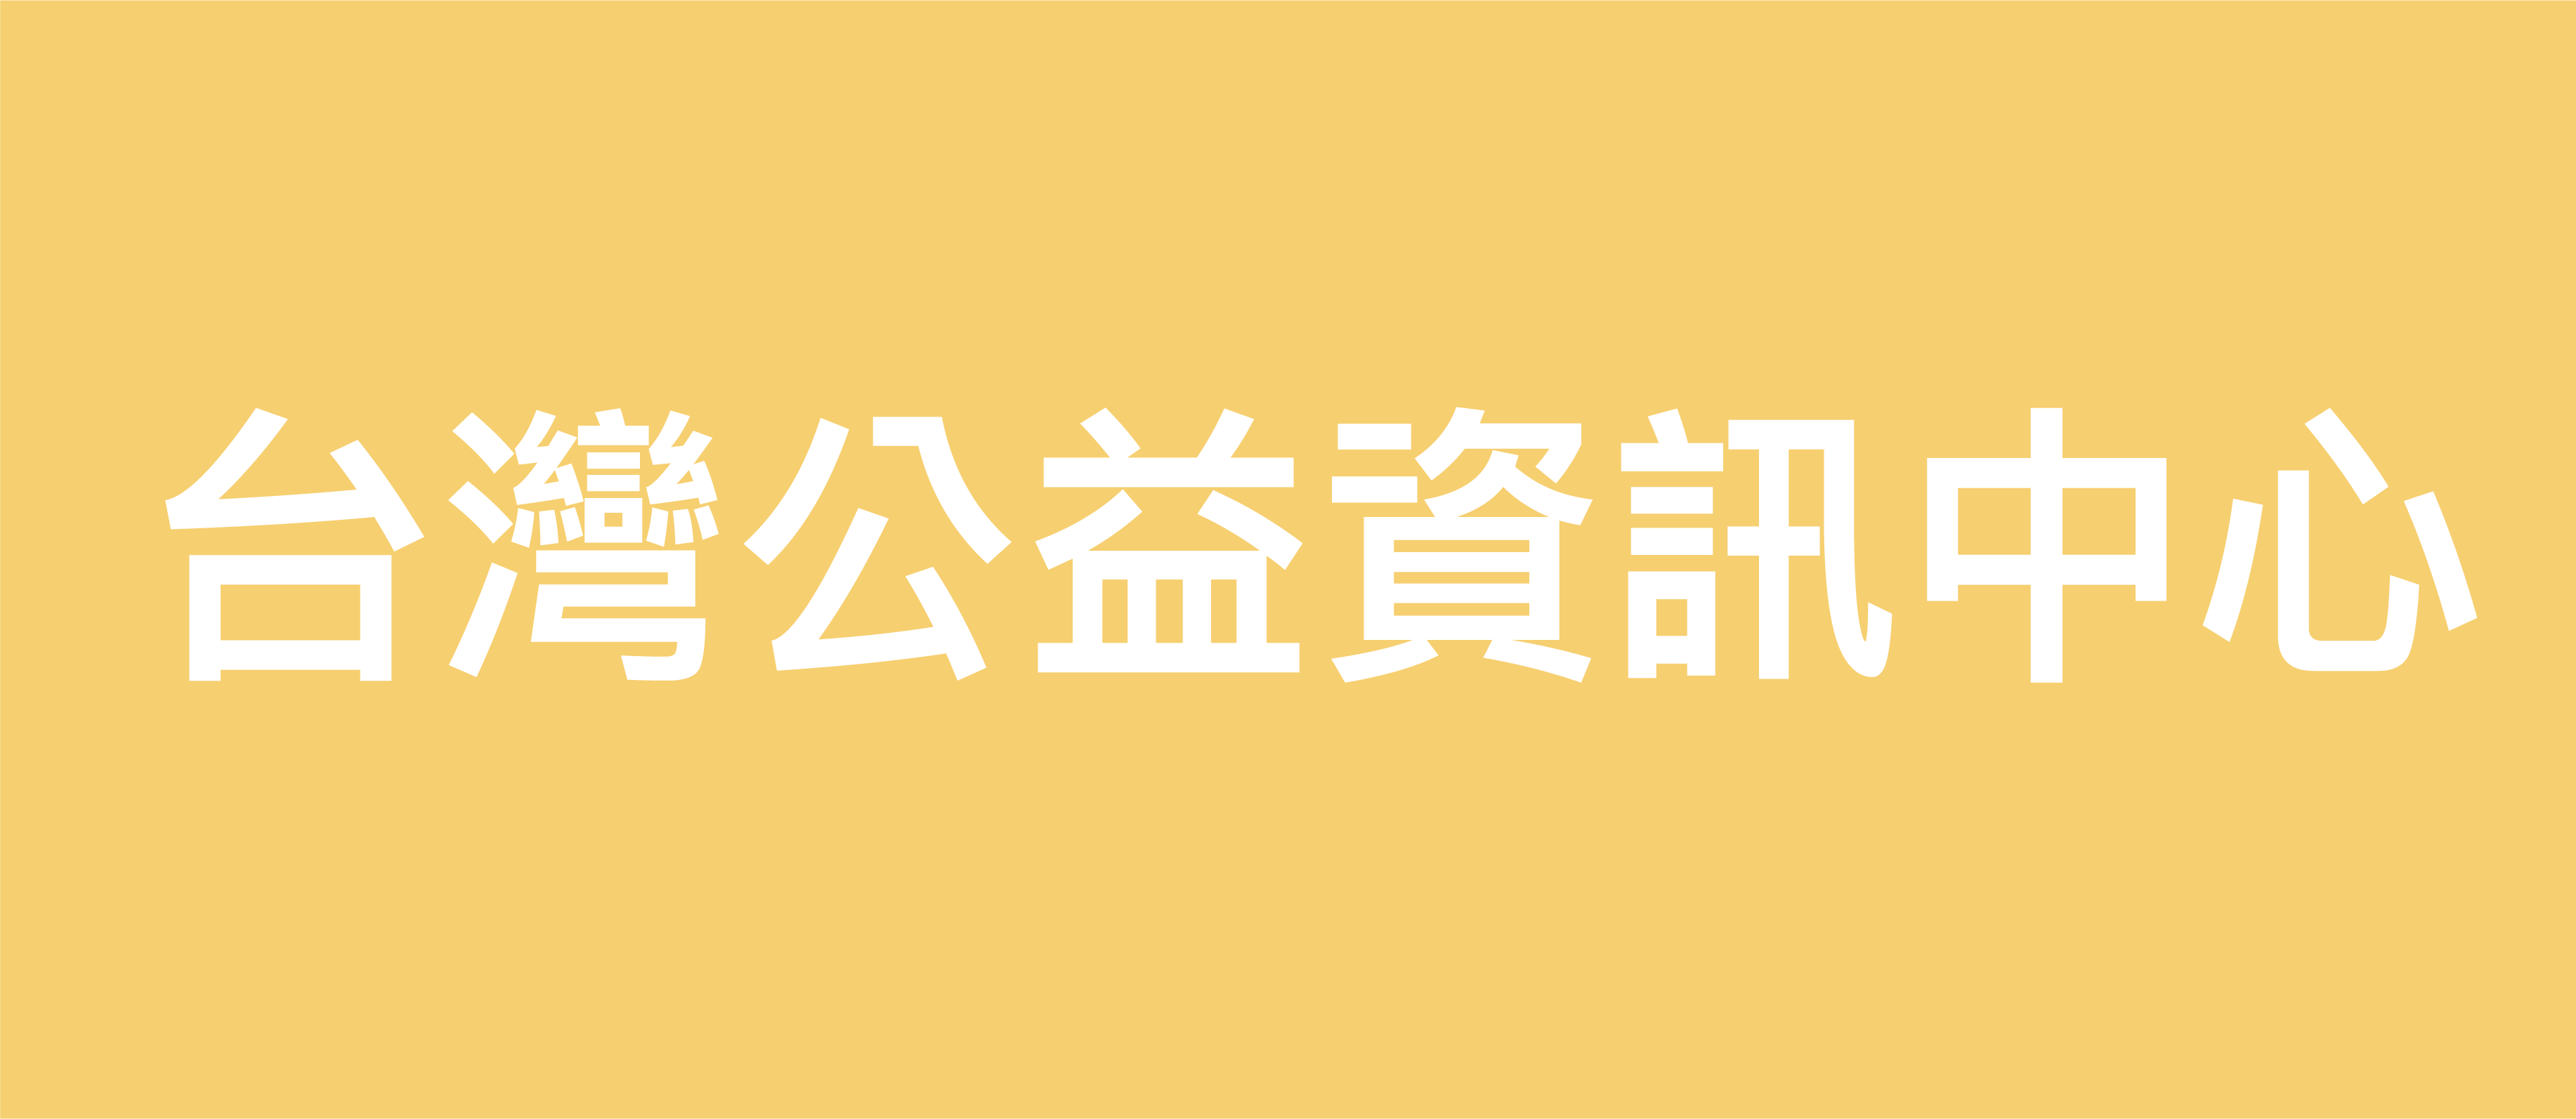 Taiwan NPO Information Platform